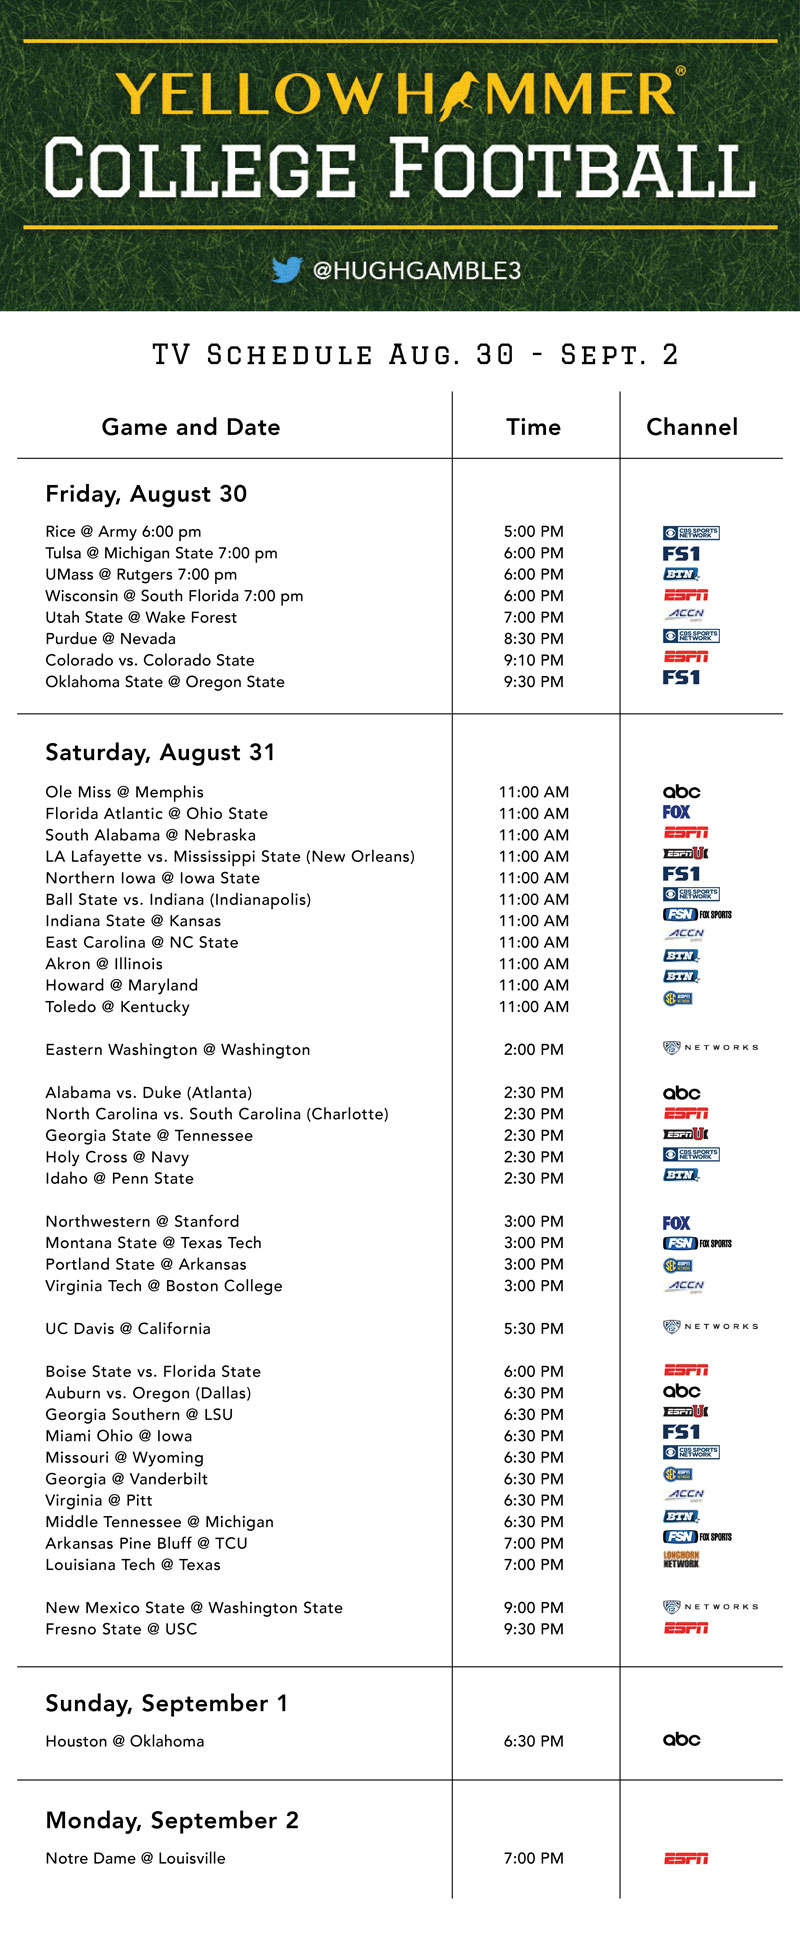 This weekend's comprehensive college football TV schedule